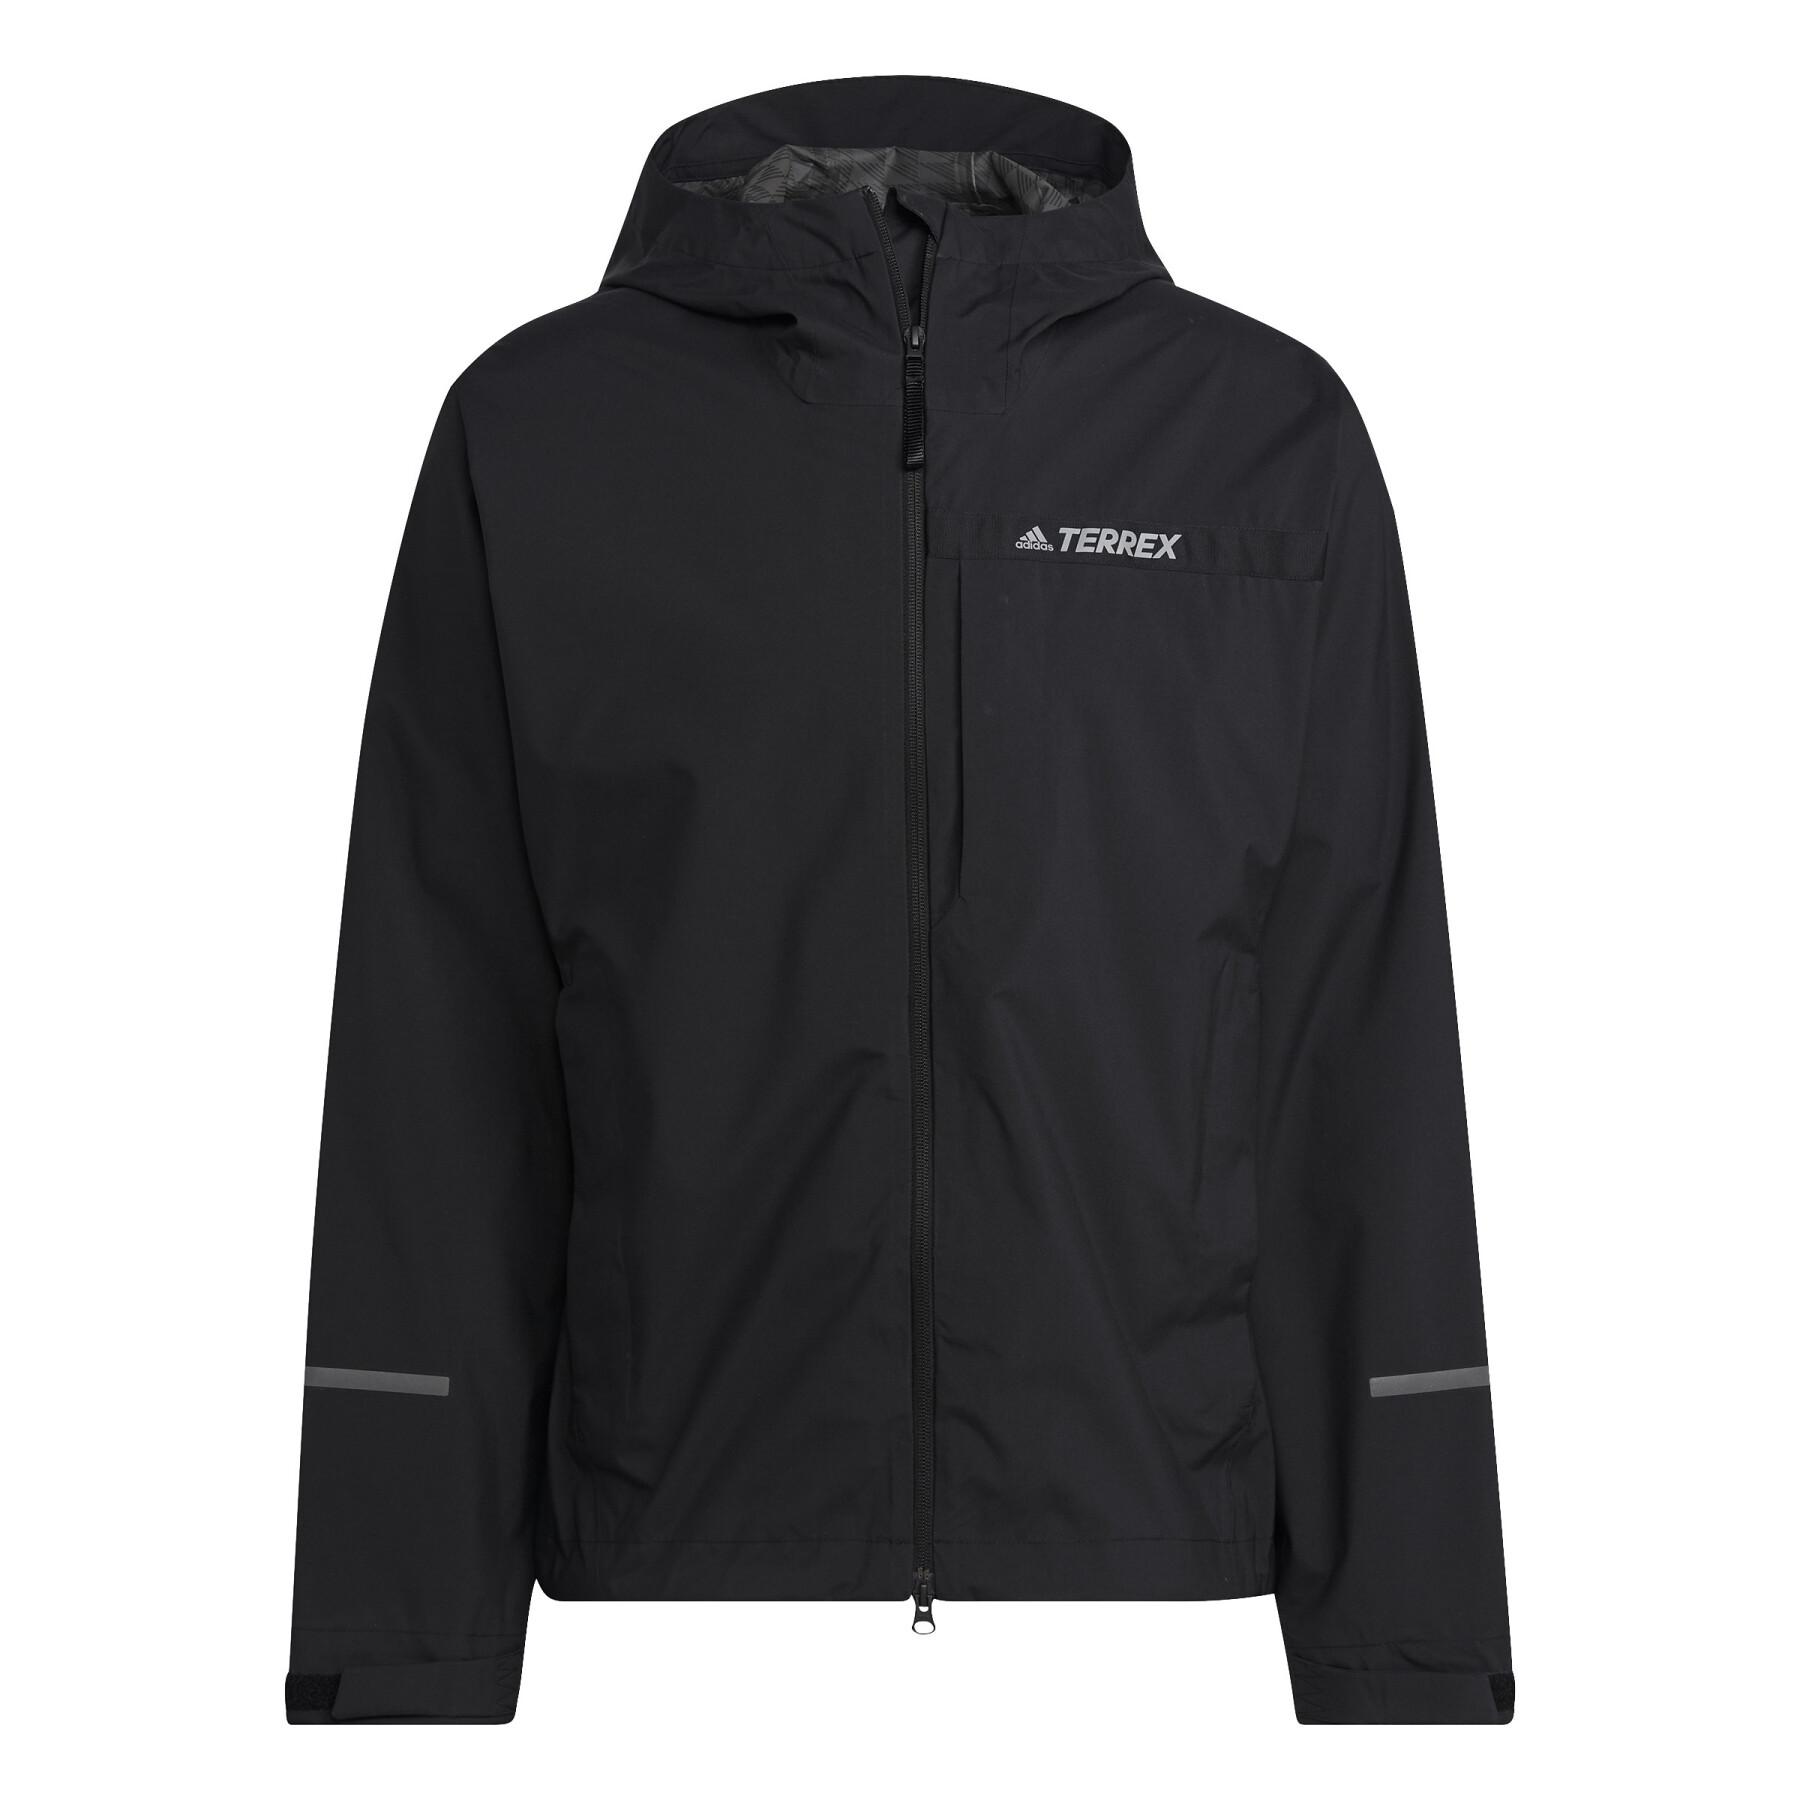 2.5 layer waterproof Jackets adidas - - Terrex jacket Hiking Clothing Rain.Rdy - Multi